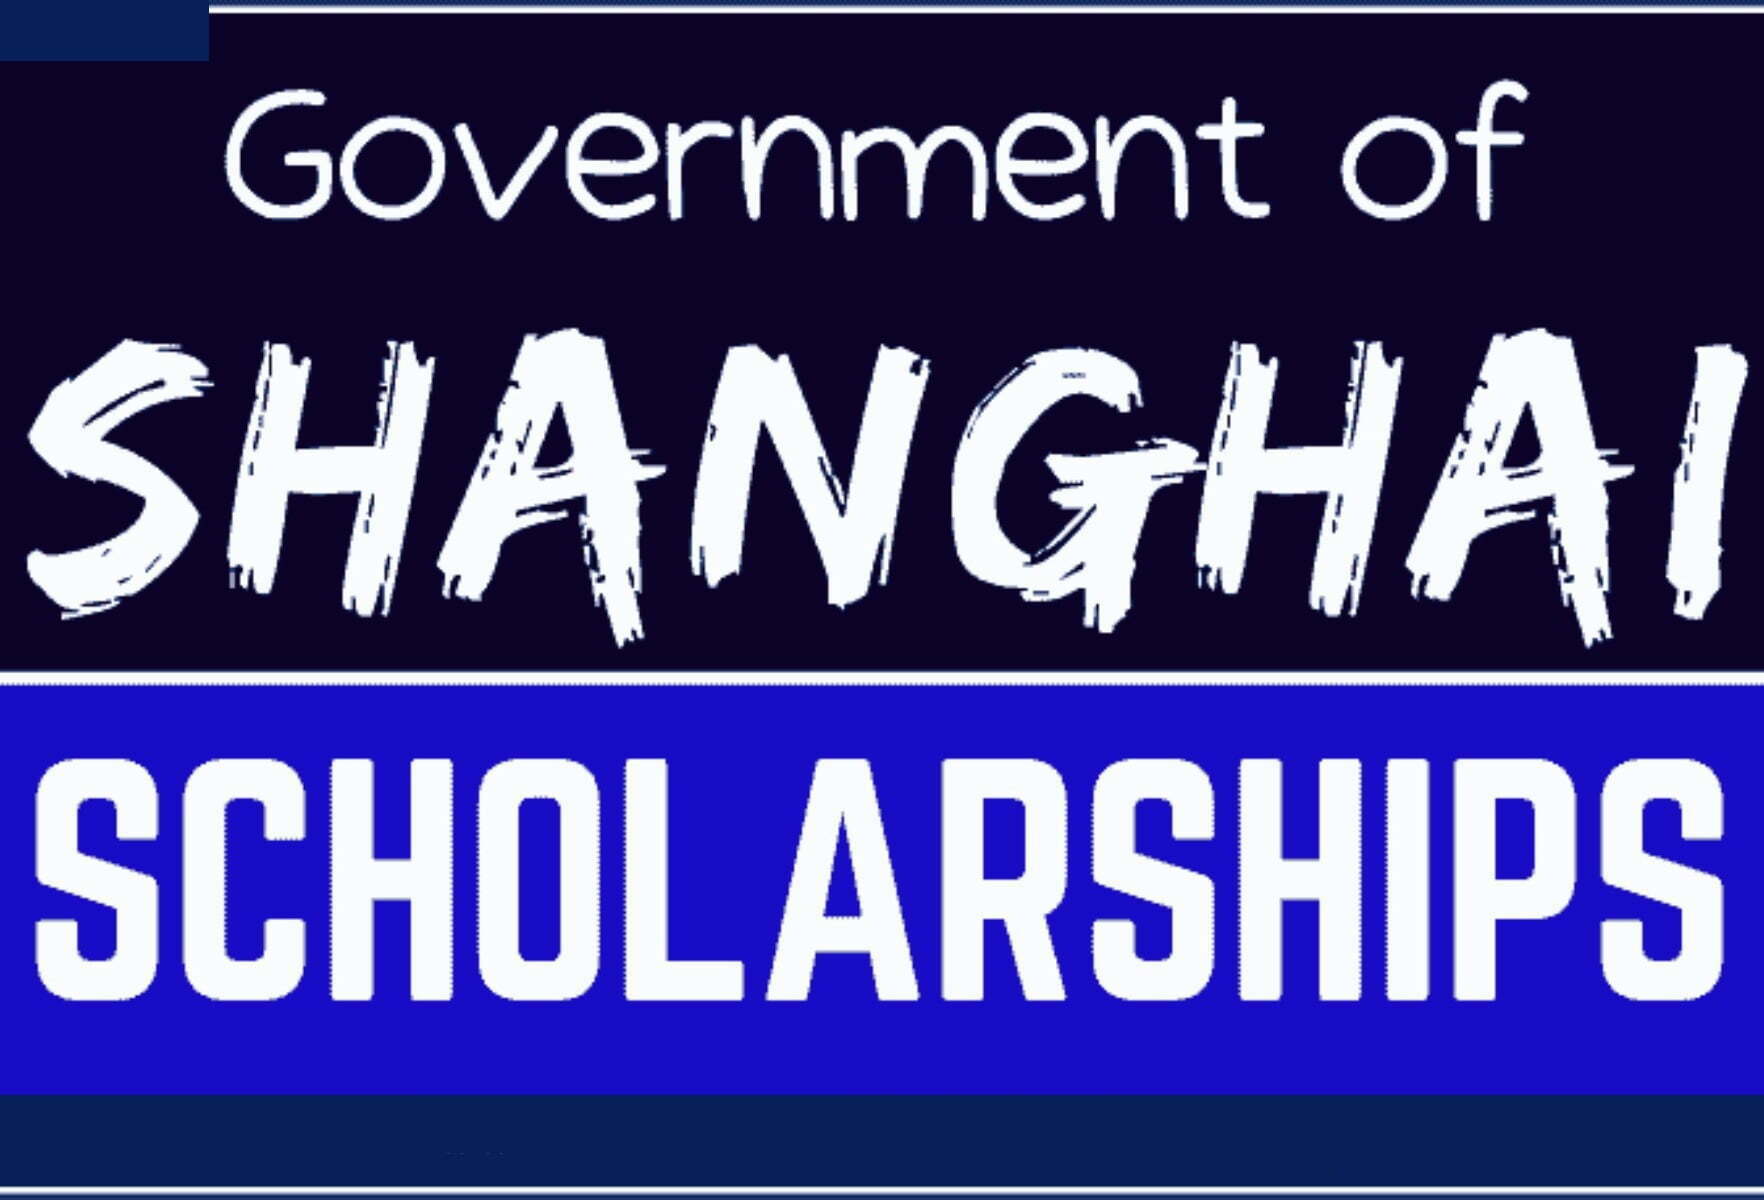 Shanghai Government Scholarship 2023 for International Students